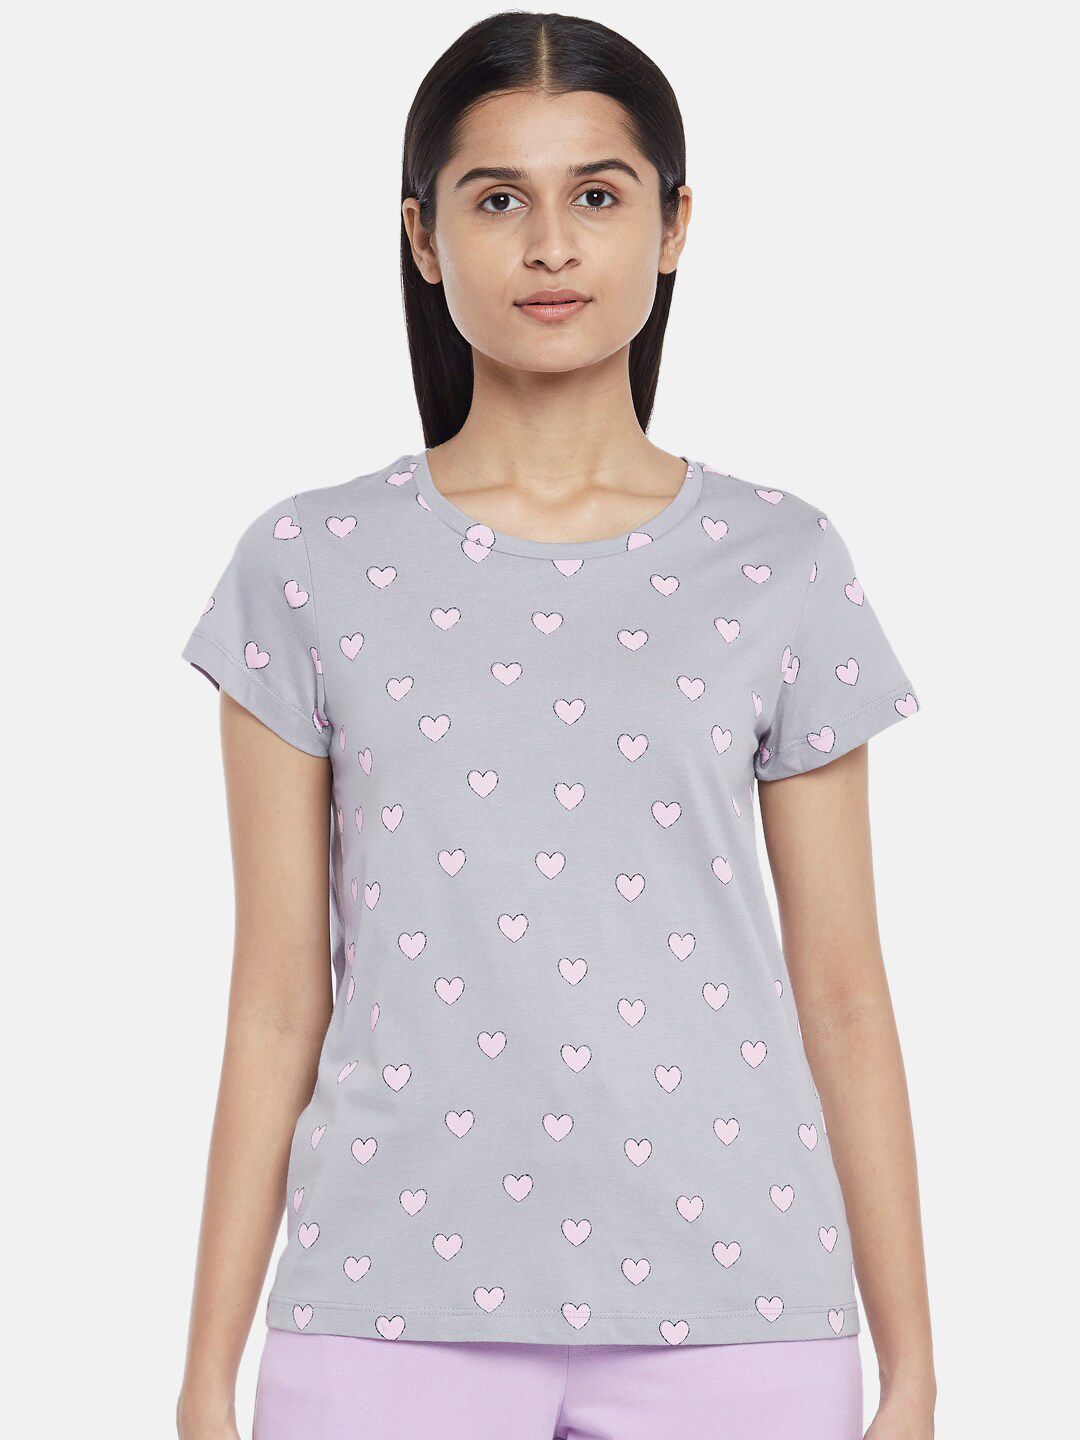 Dreamz by Pantaloons Women Grey Printed Lounge Tshirt Price in India